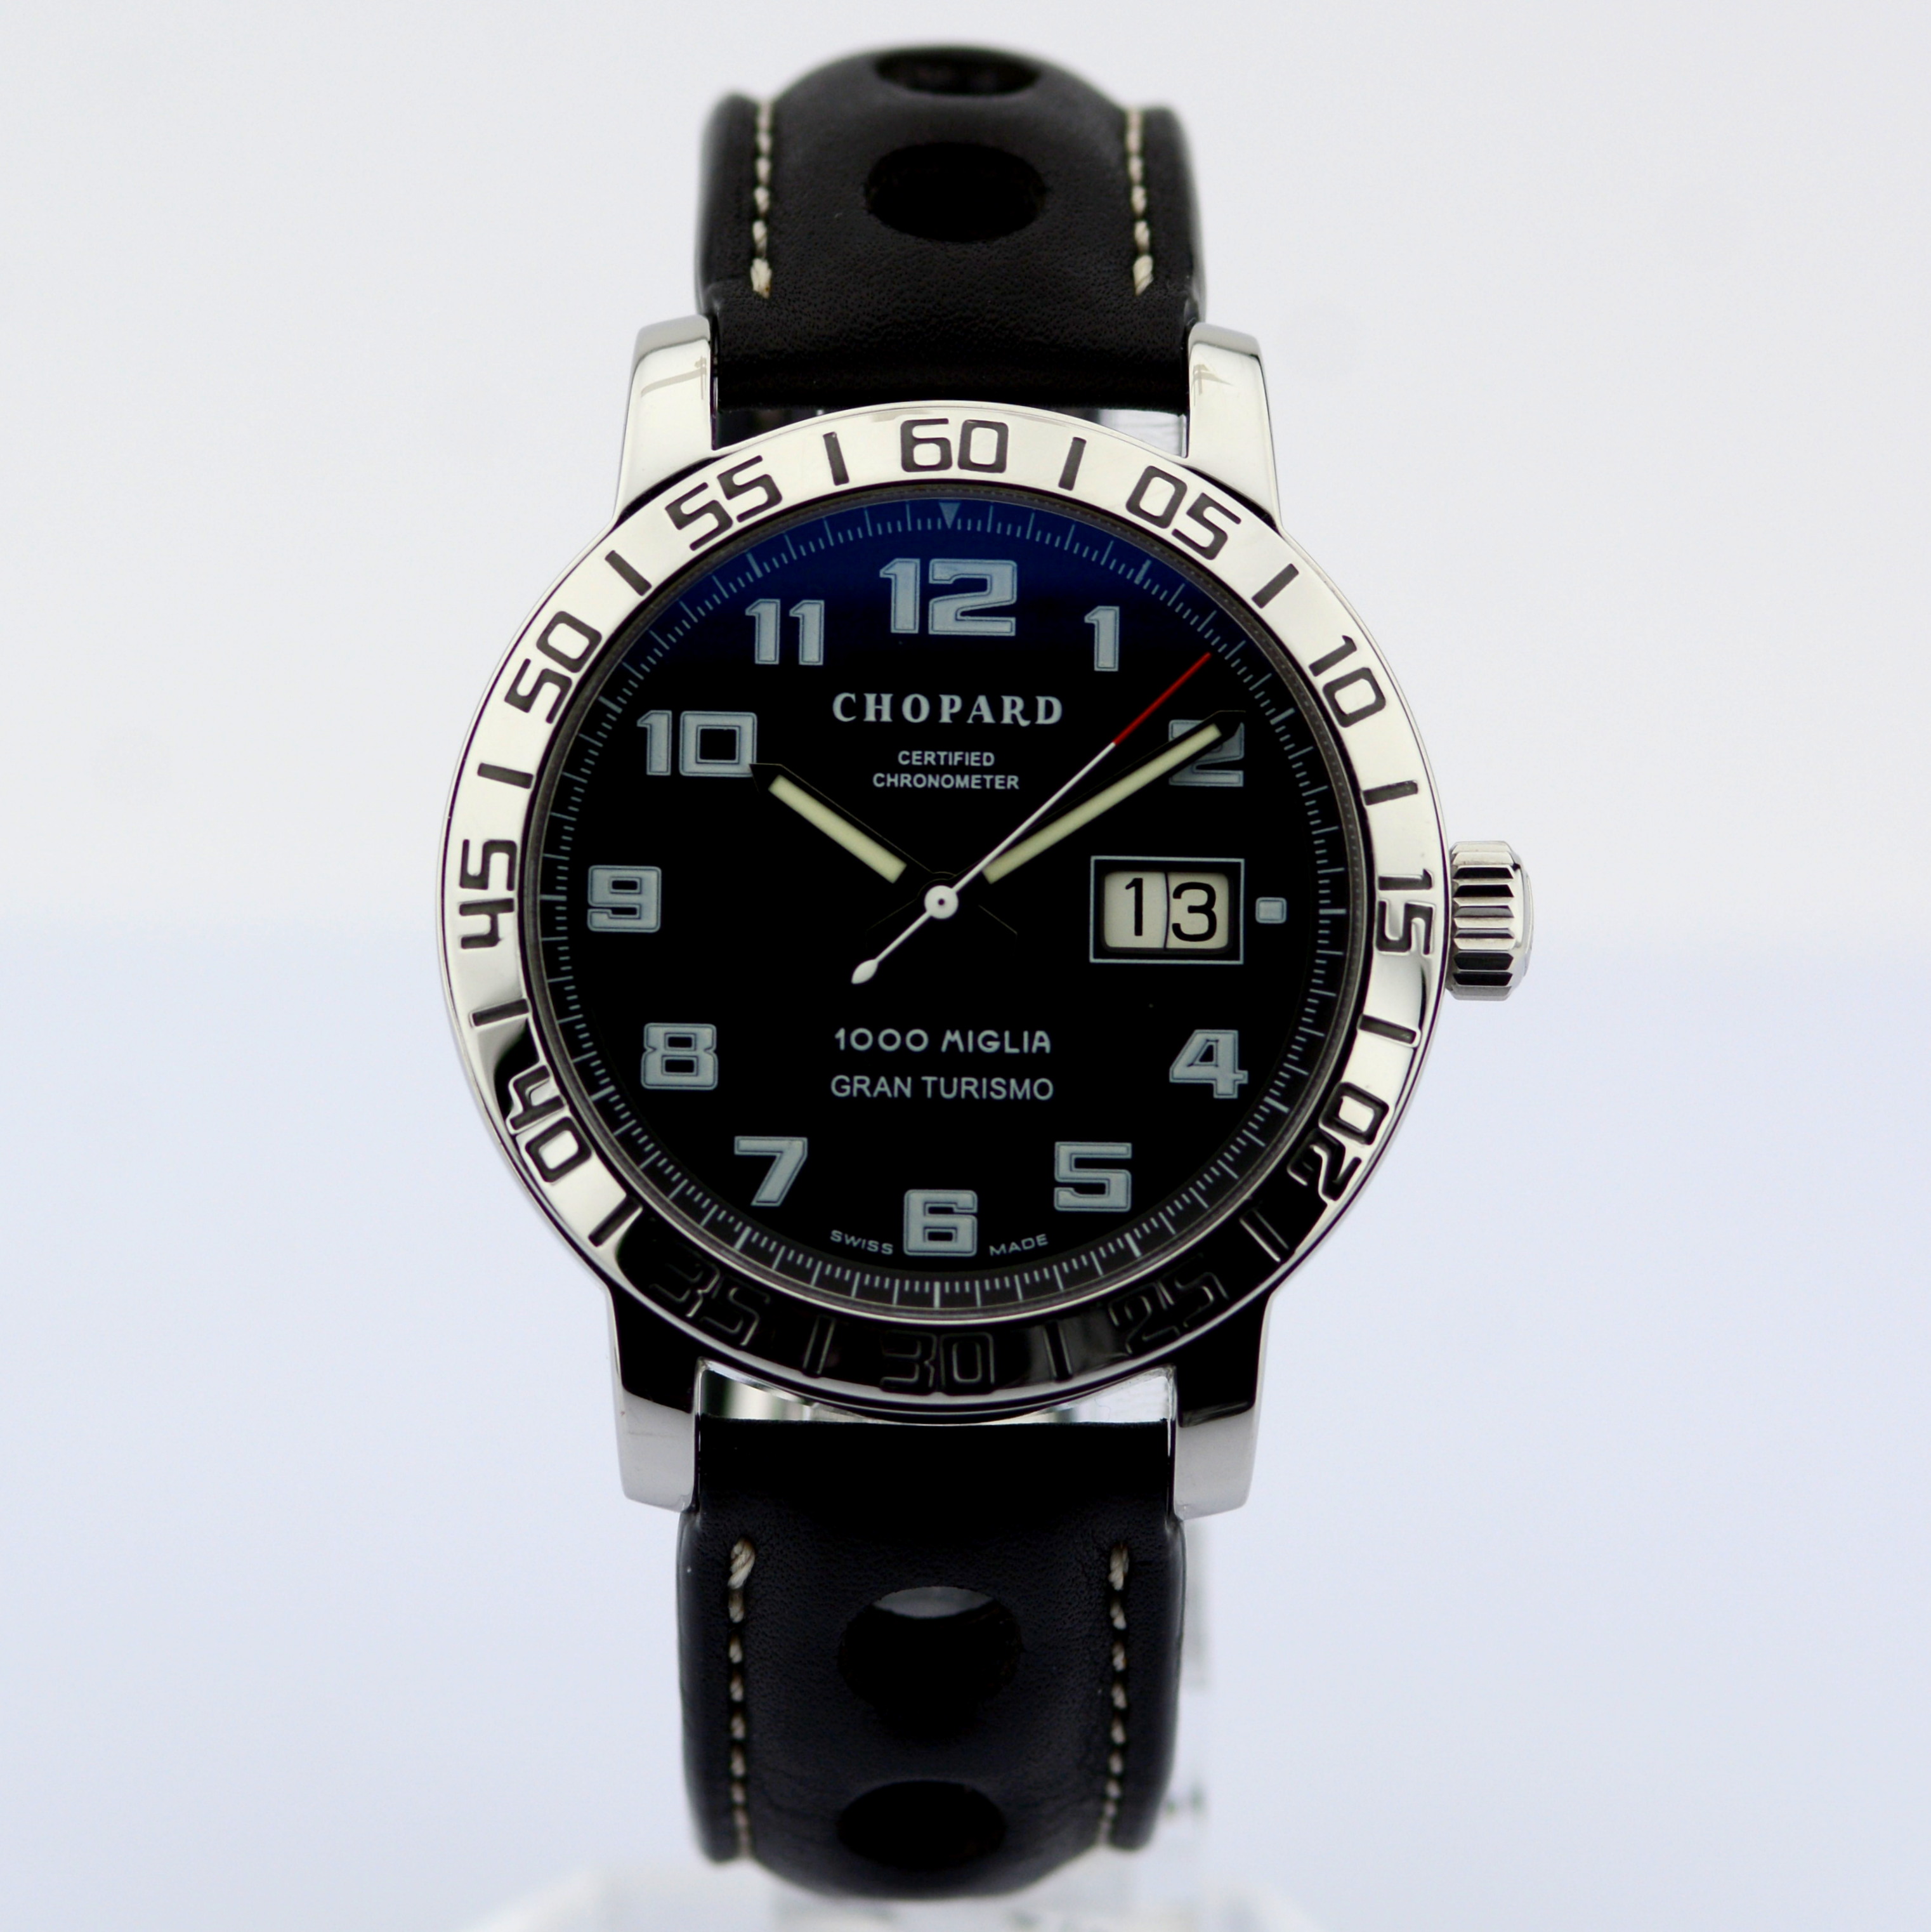 Chopard / 1000 Miglia Grand Turismo Prototype - Gentlmen's Steel Wrist Watch - Image 2 of 8